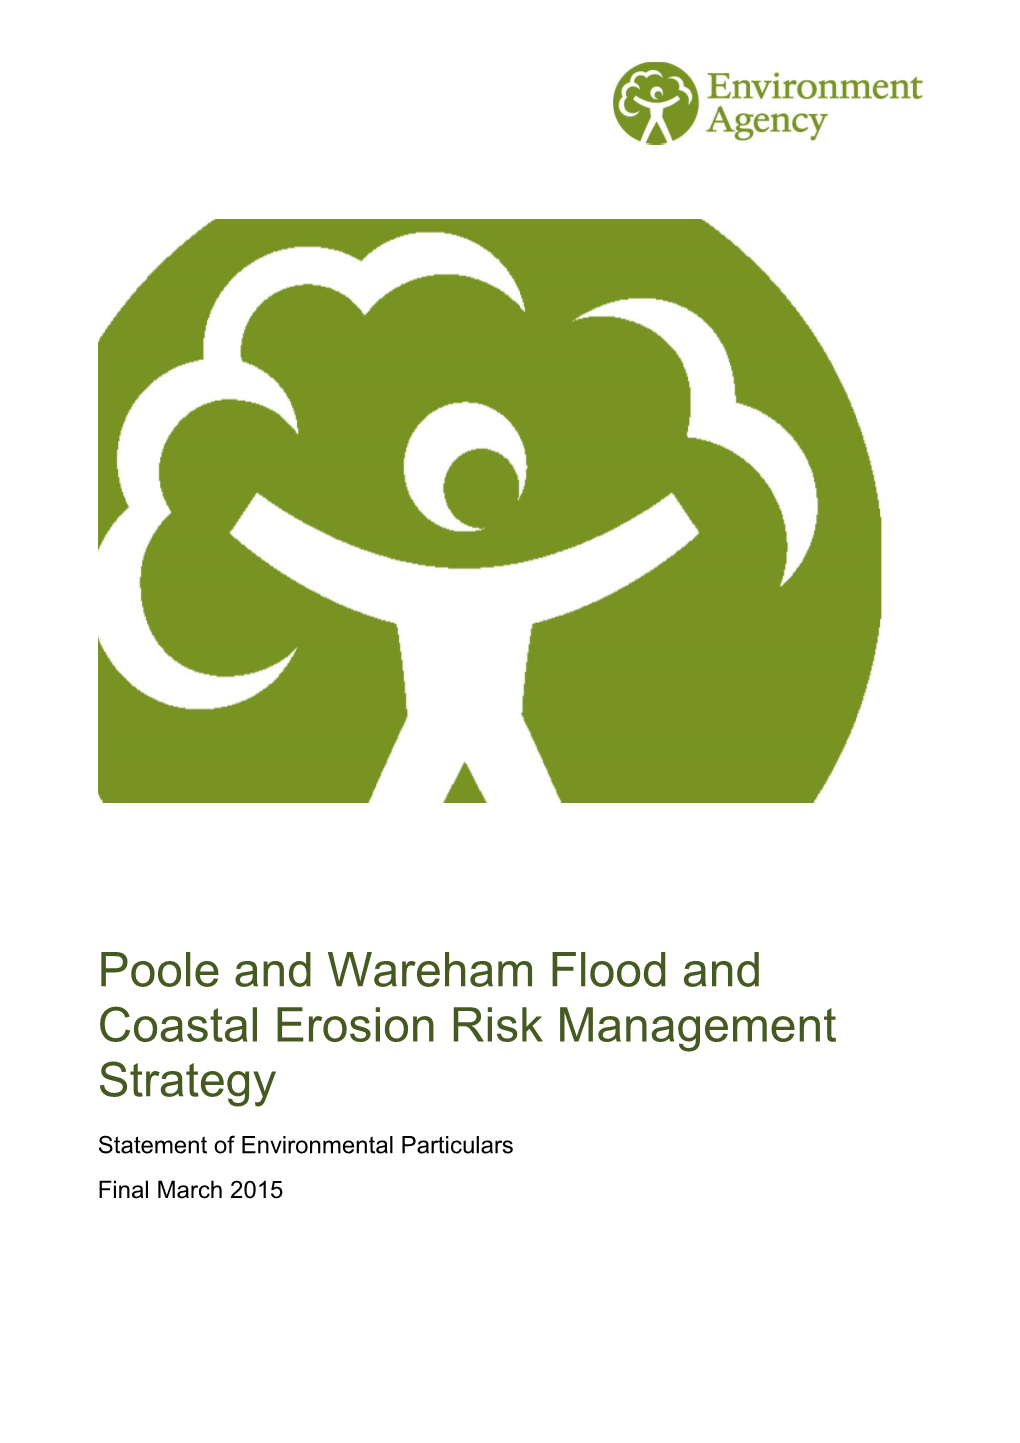 Poole and Wareham Flood and Coastal Erosion Risk Management Strategy